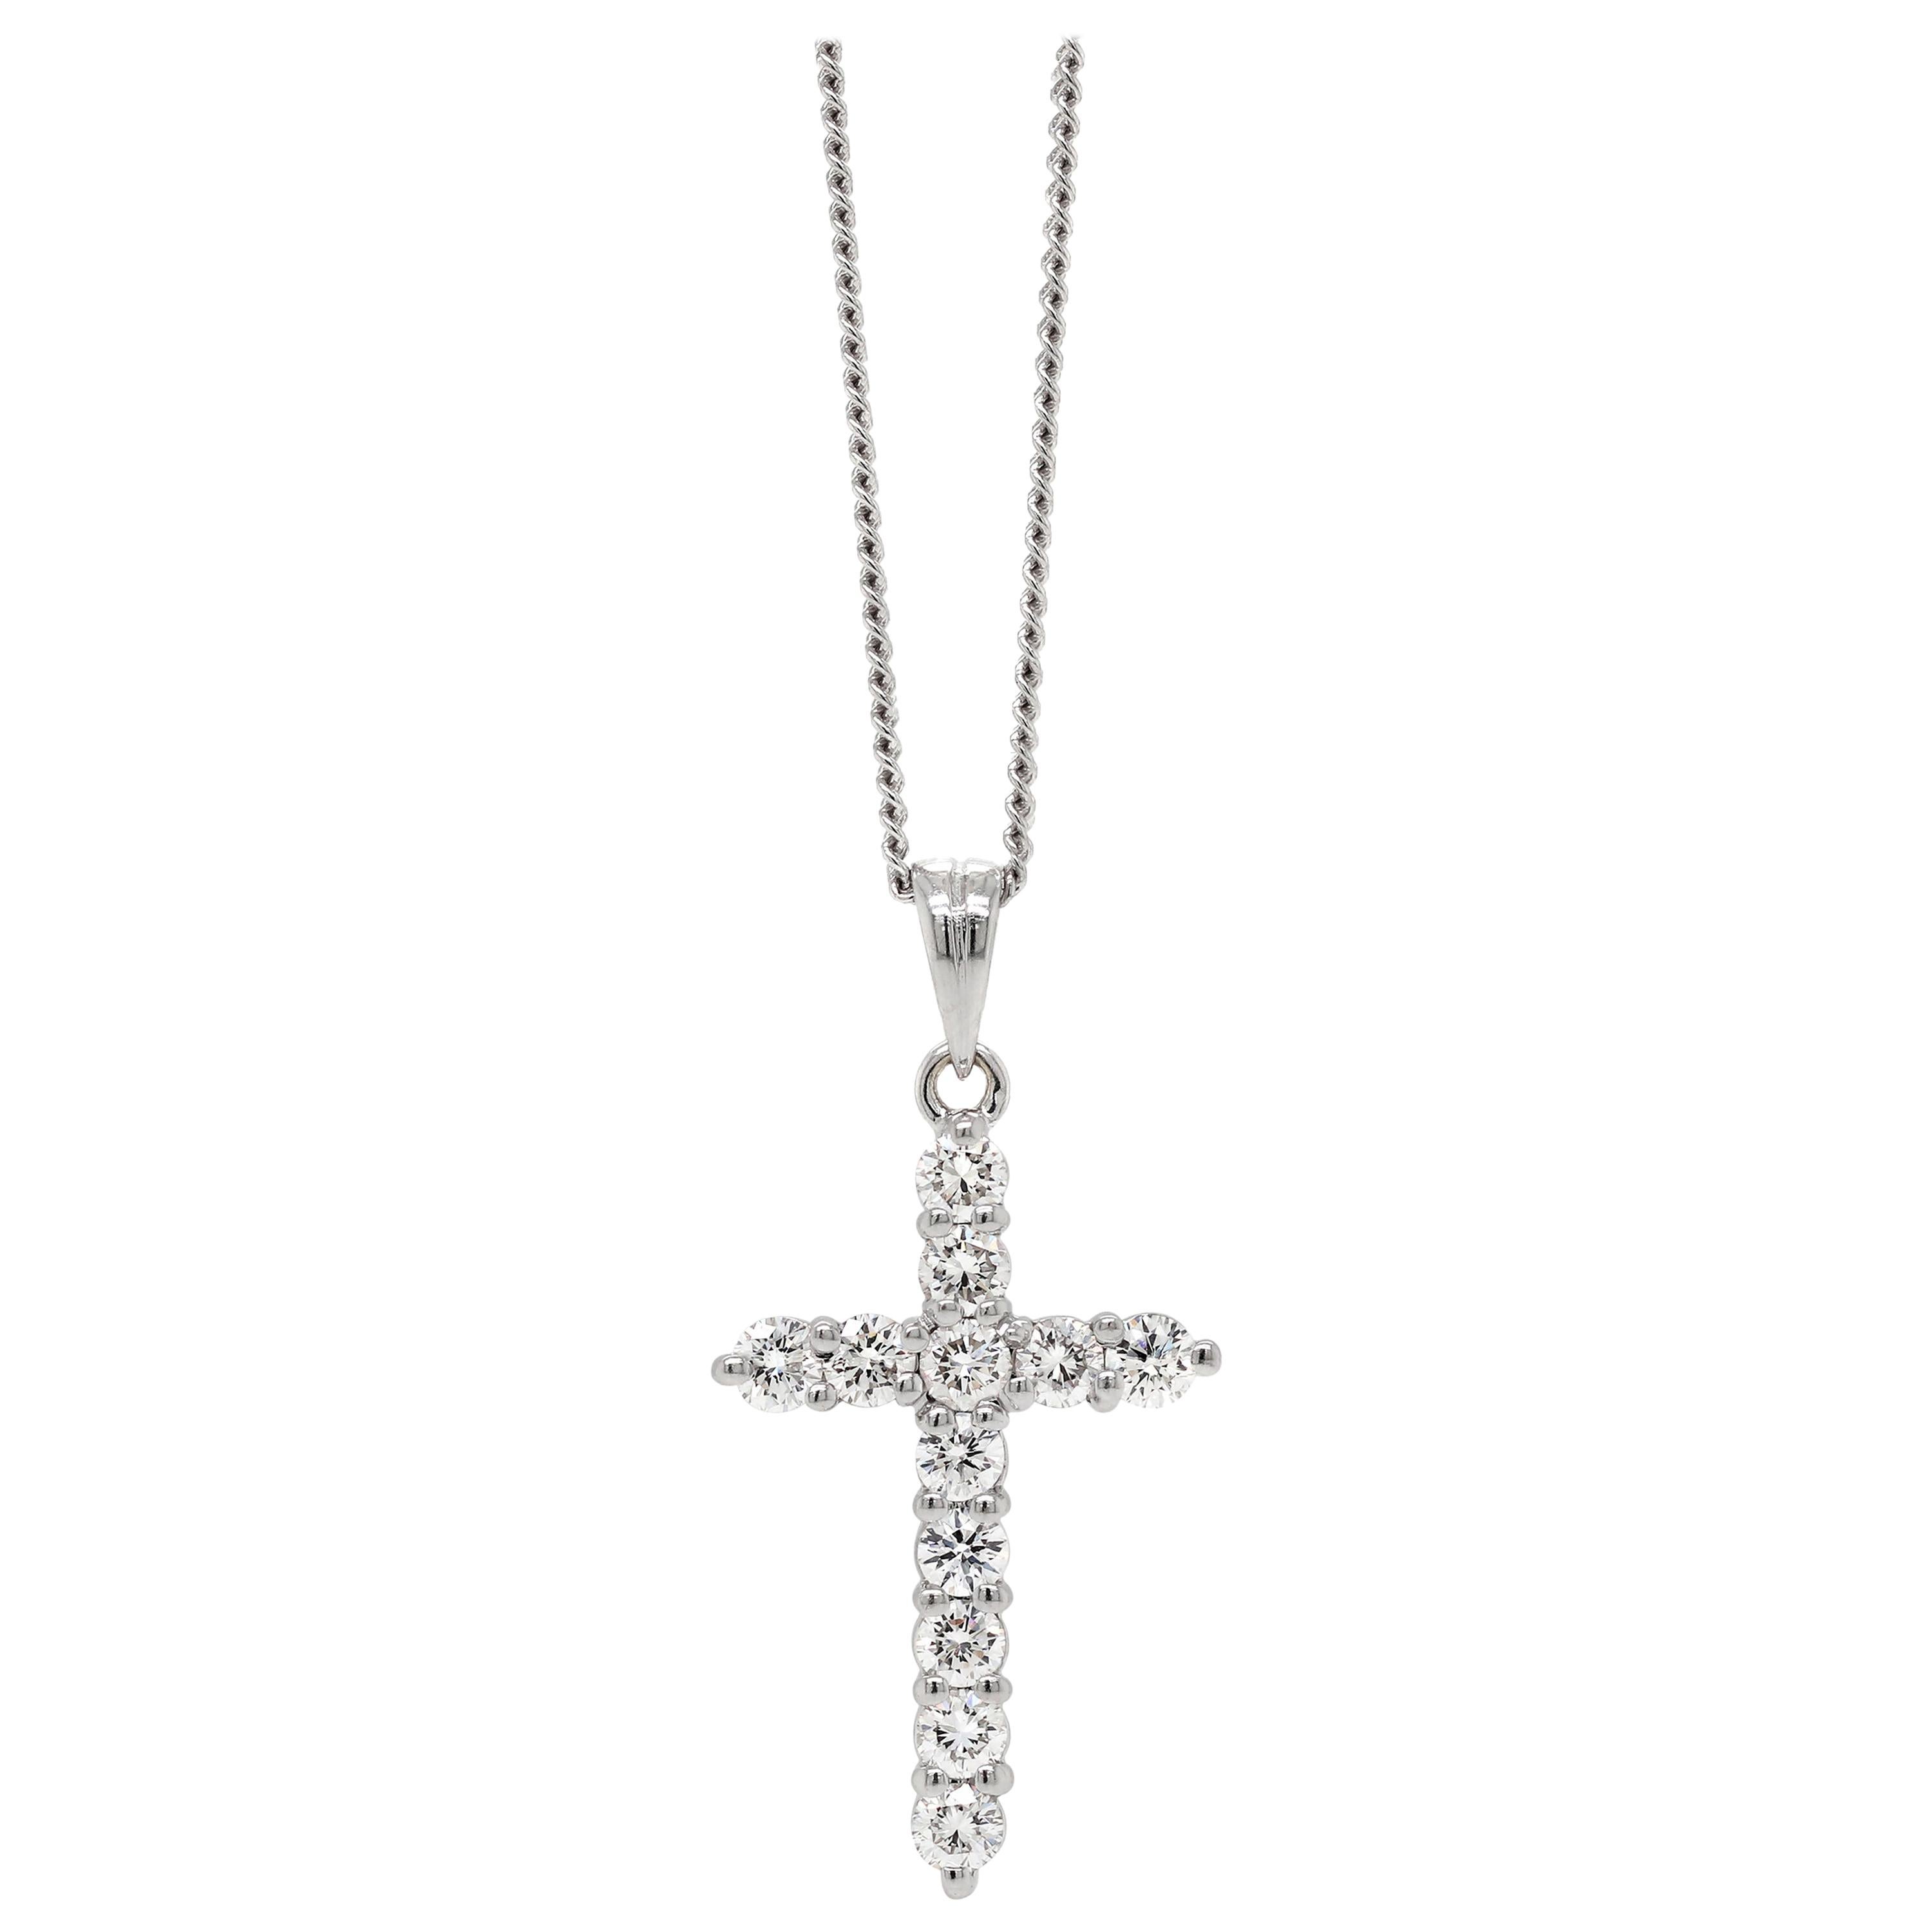 18 Carat White Gold Diamond Cross Pendant and Chain